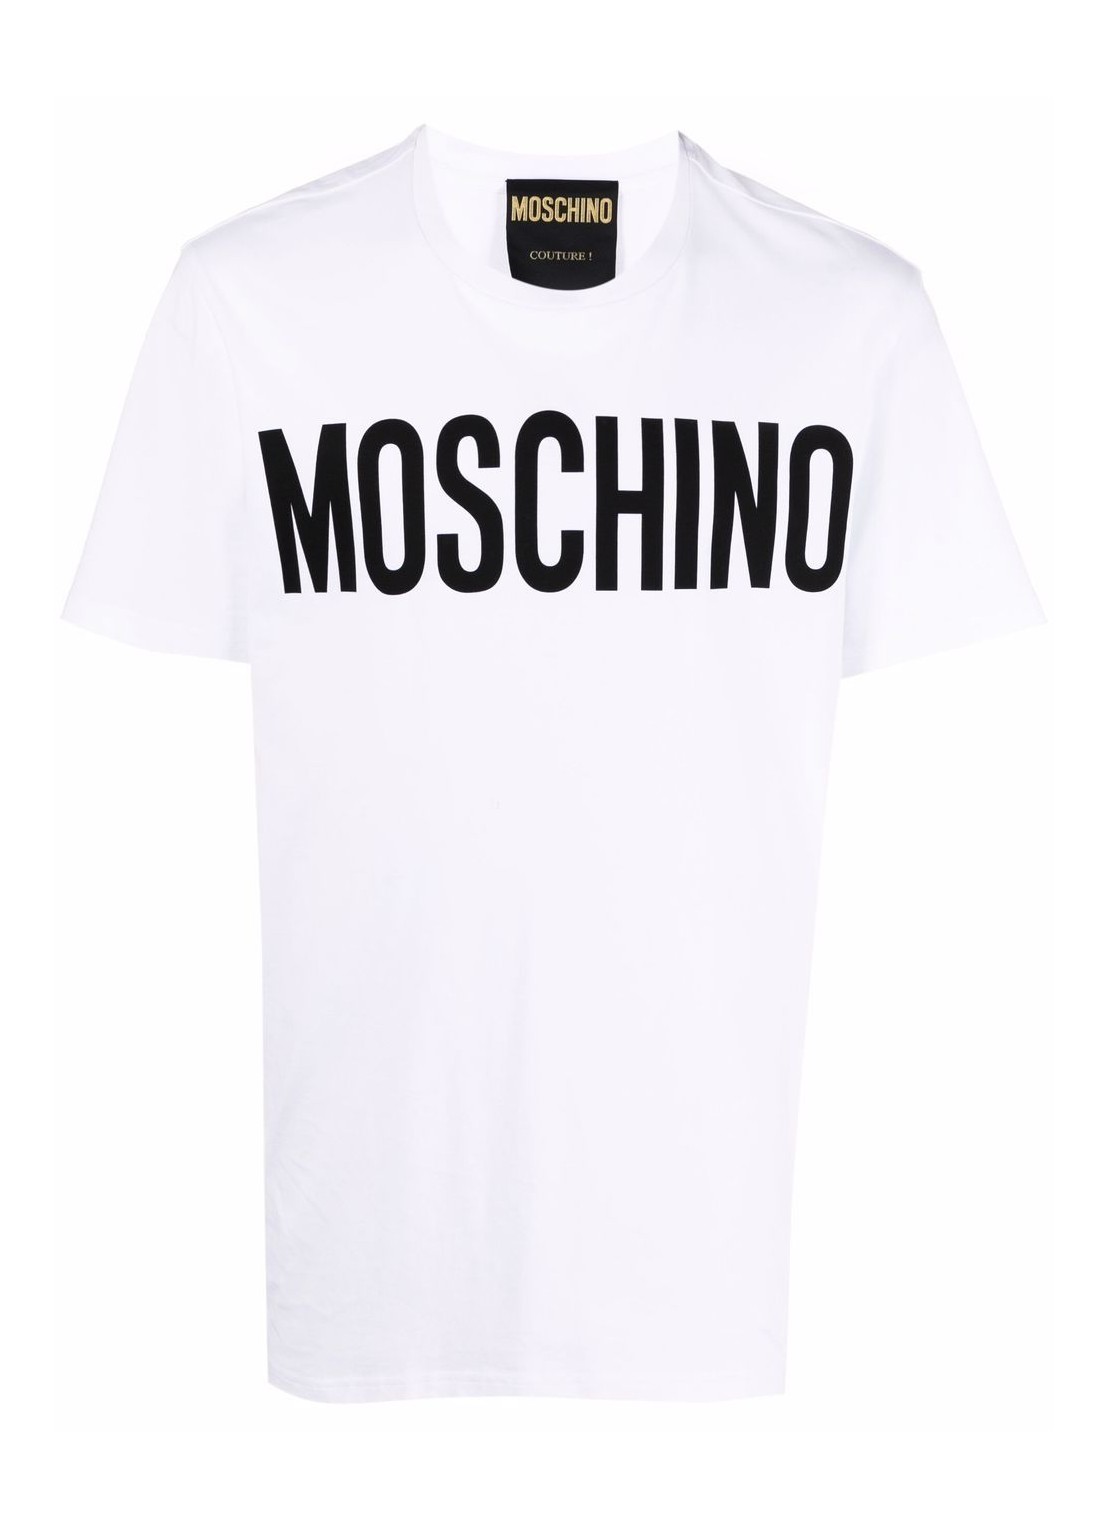 Camiseta moschino couture organic cotton jersey - 07012041 a1001 talla blanco
 